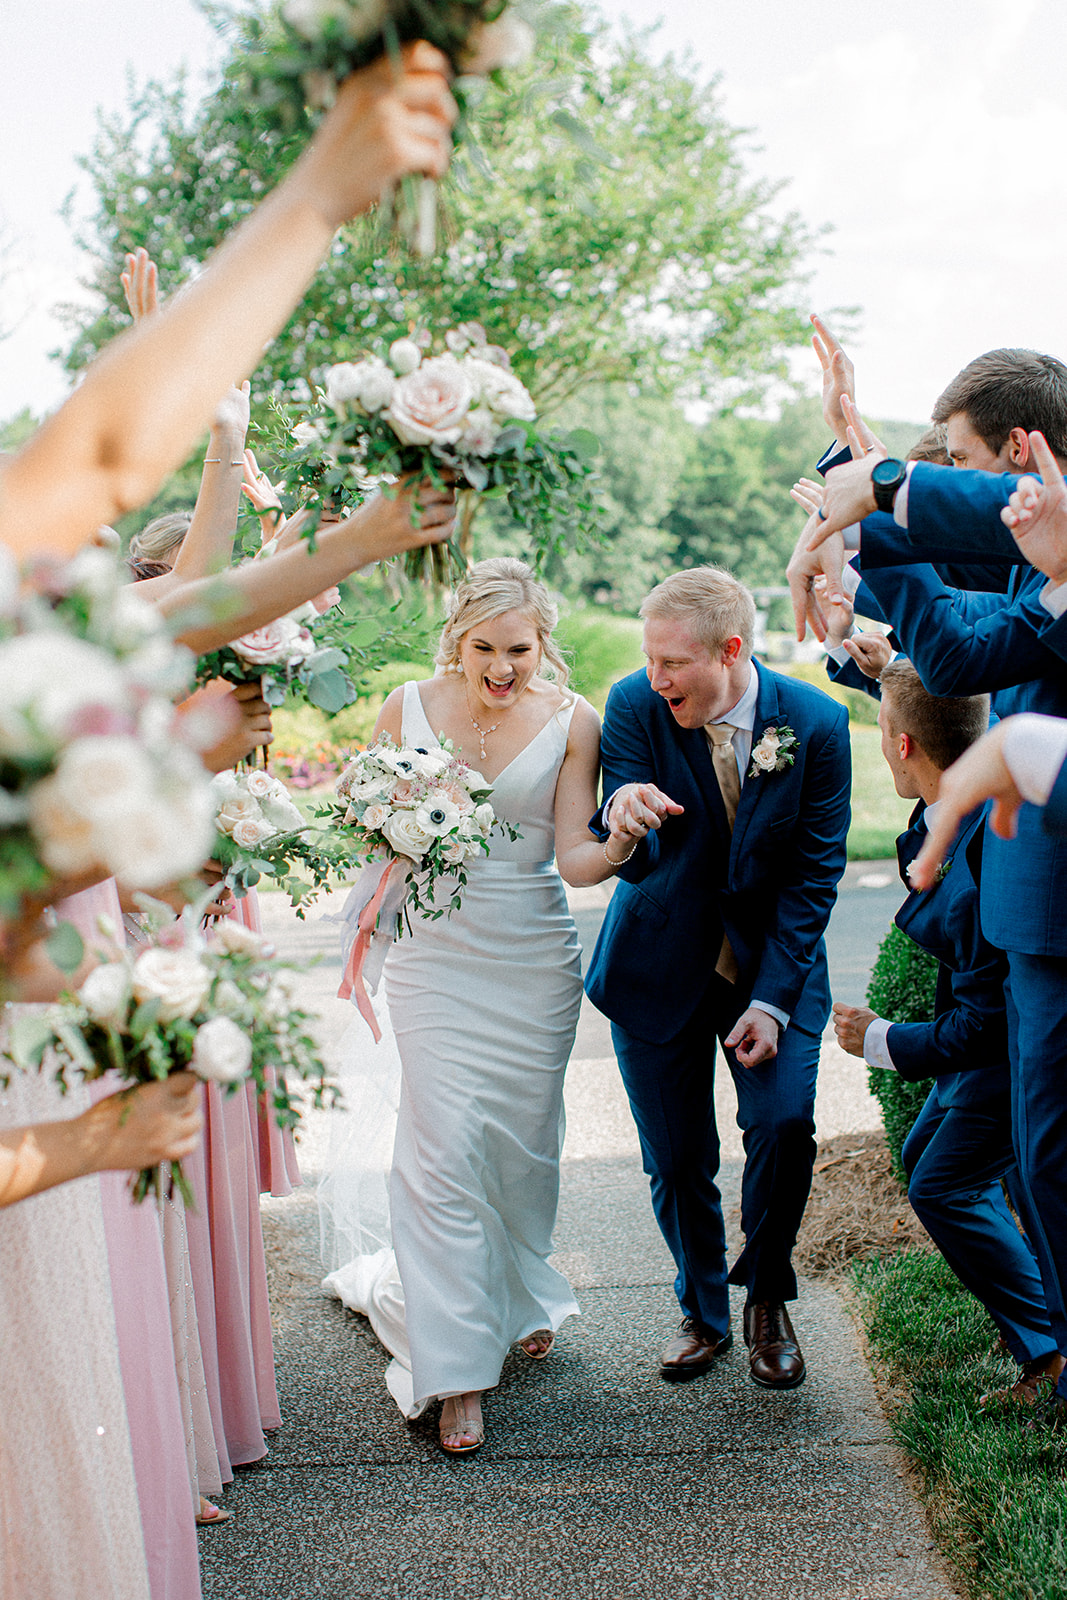 Tennessee Wedding Photographer Ashton Brooke Photography | Nashville Bride Guide